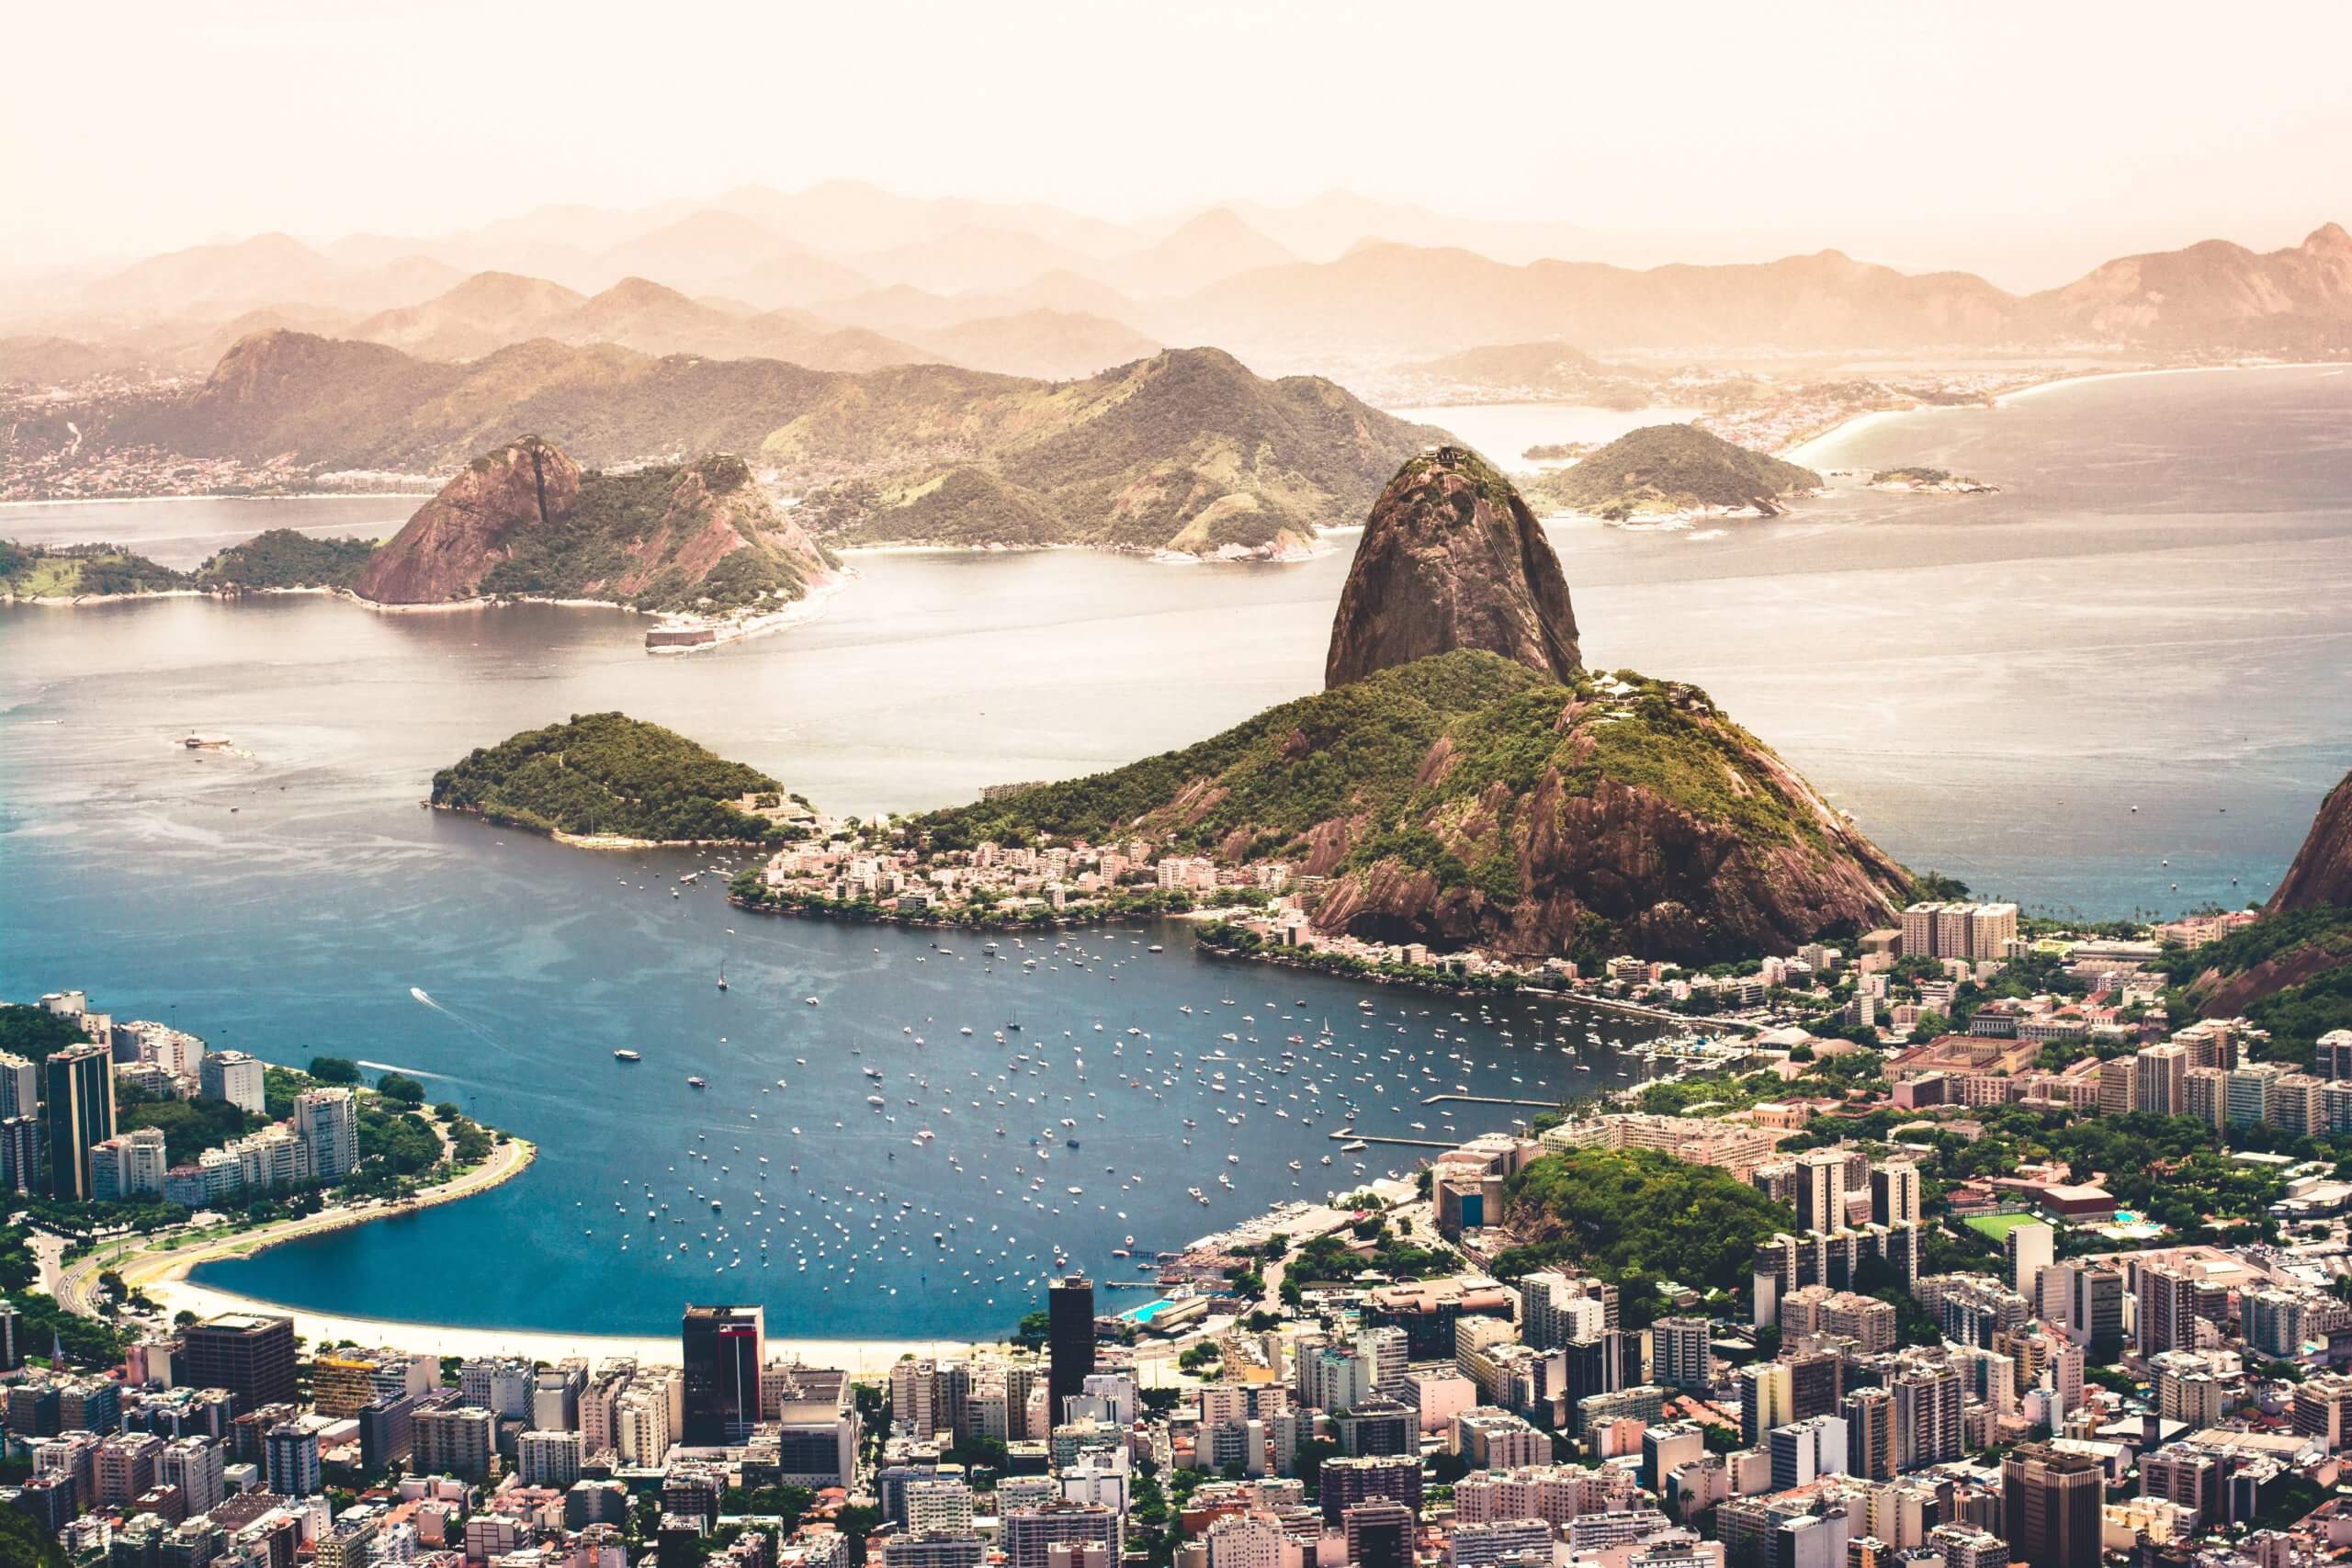 Montreal to Rio de Janeiro, Brazil – $686 CAD roundtrip w/ Copa Airlines